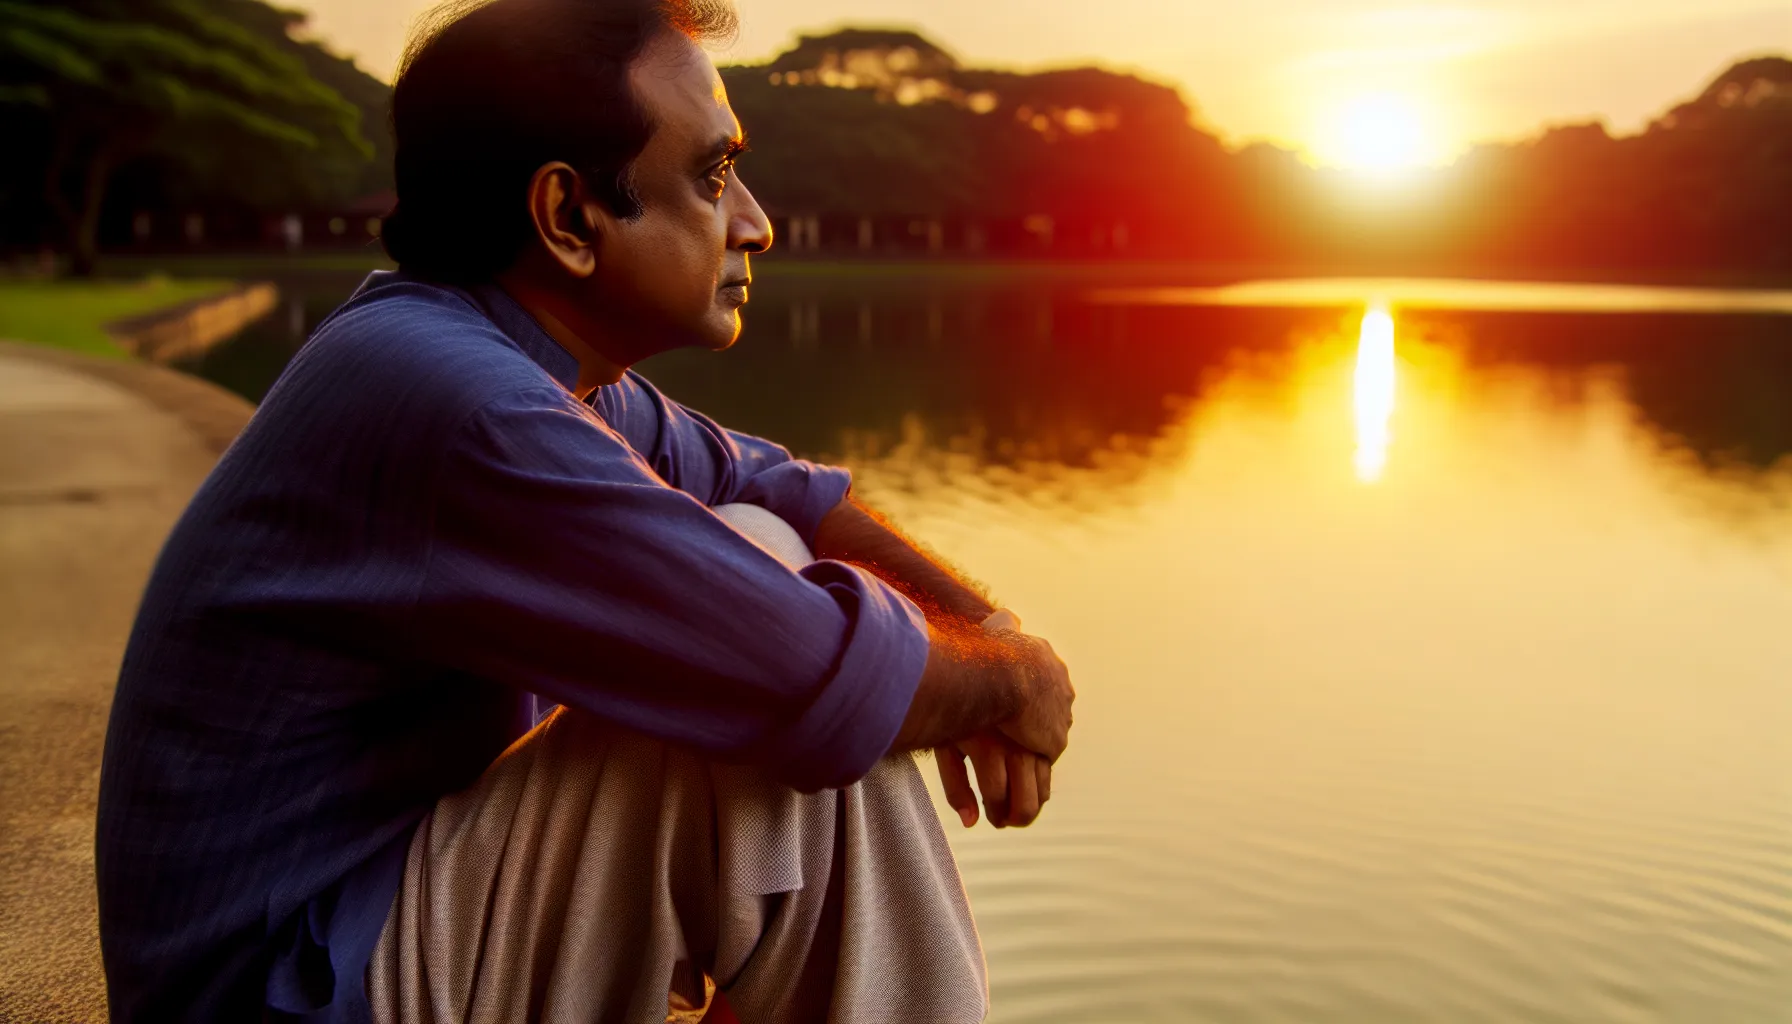 Man contemplating partnership by a serene lake at sunset